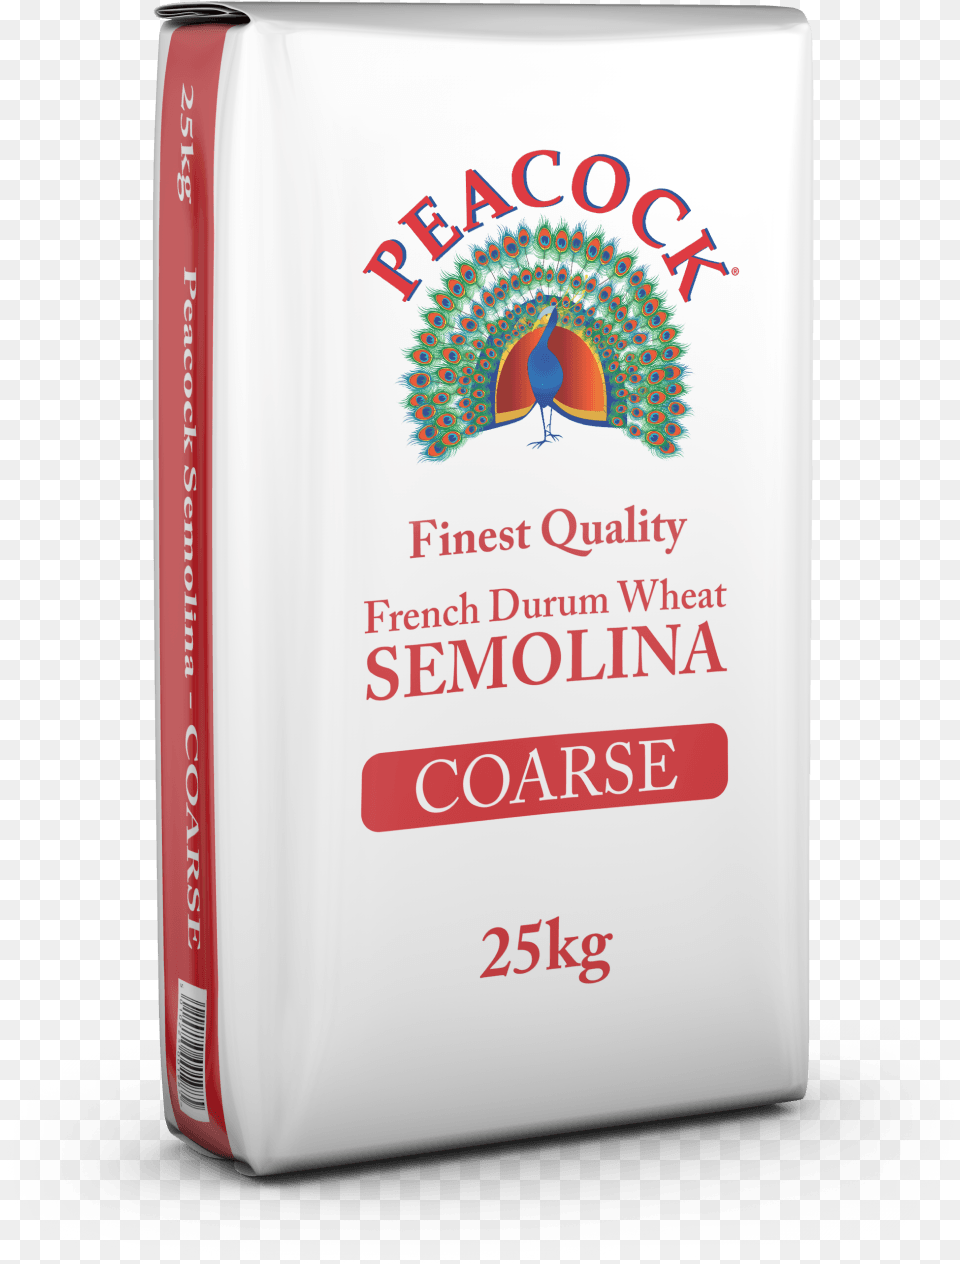 Peacock Semolina Course 25kg Illustration, Powder, Bottle Free Transparent Png